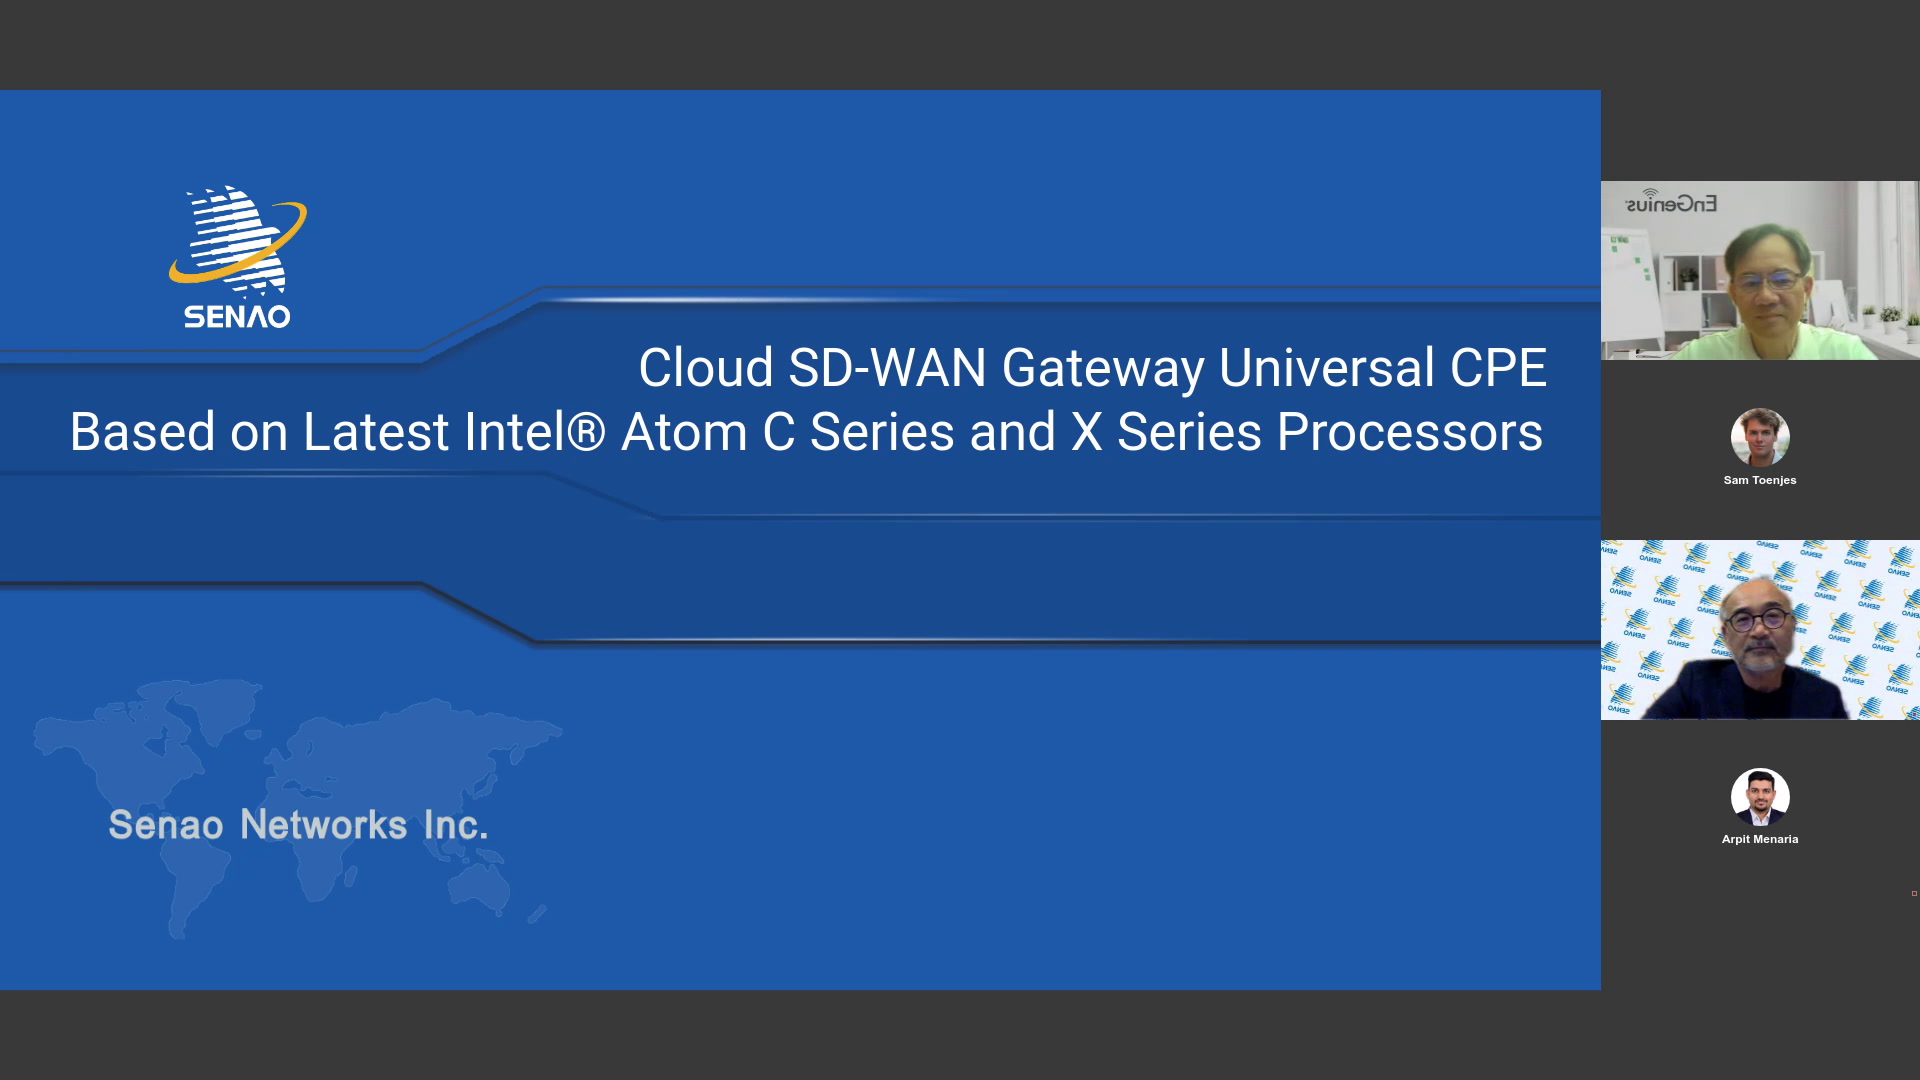 Cloud SD-WAN Gateway Universal CPE based on latest Intel® Atom processors